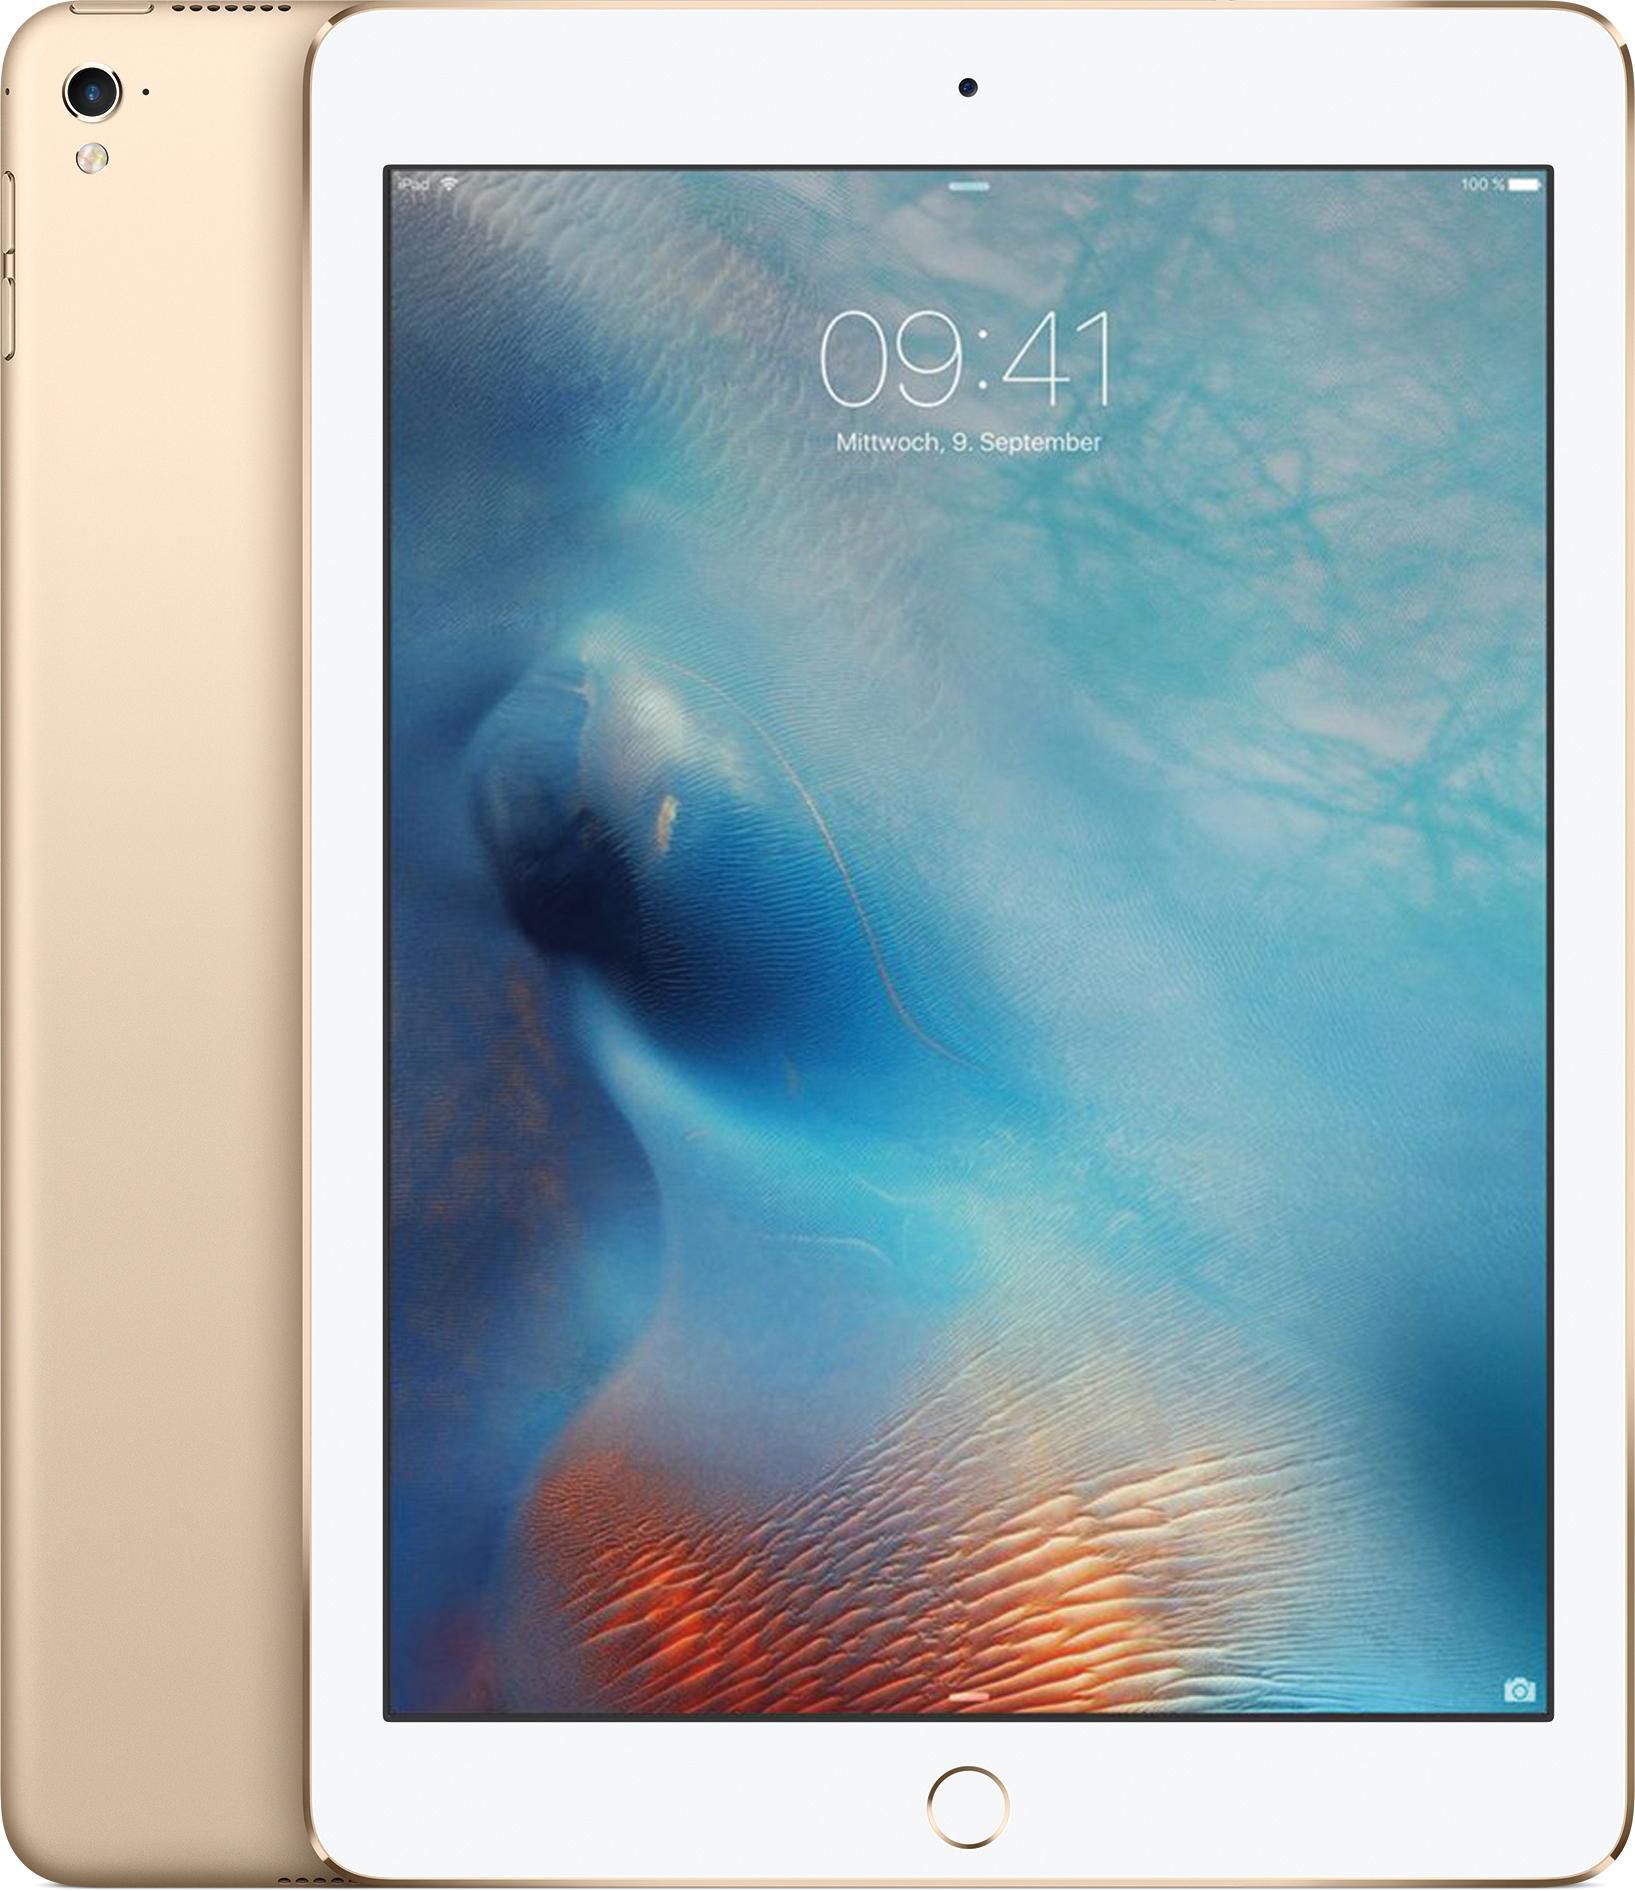 Apple iPad Pro 9.7, WiFi Tablet PC, 9.7", 32 GB (NAND Flash), Gold